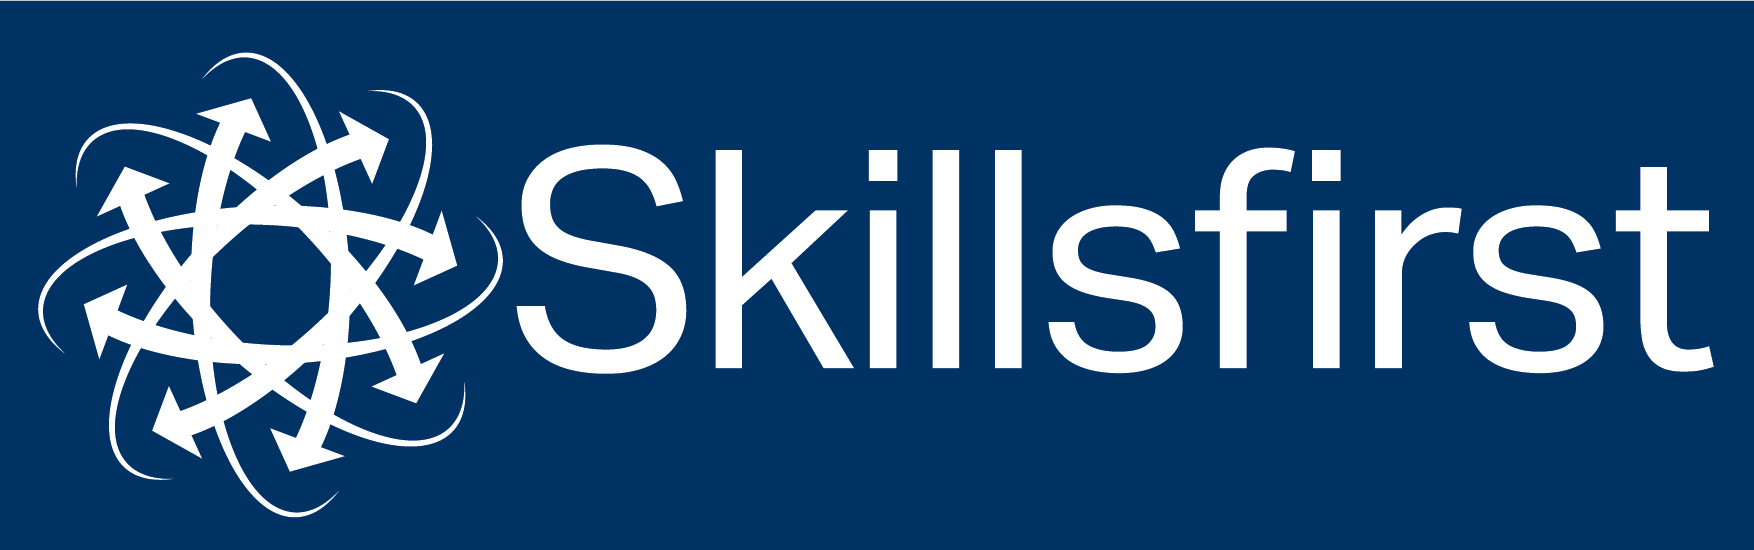 Skillsfirst_Logo_Blue_Background_No_Tagline-01